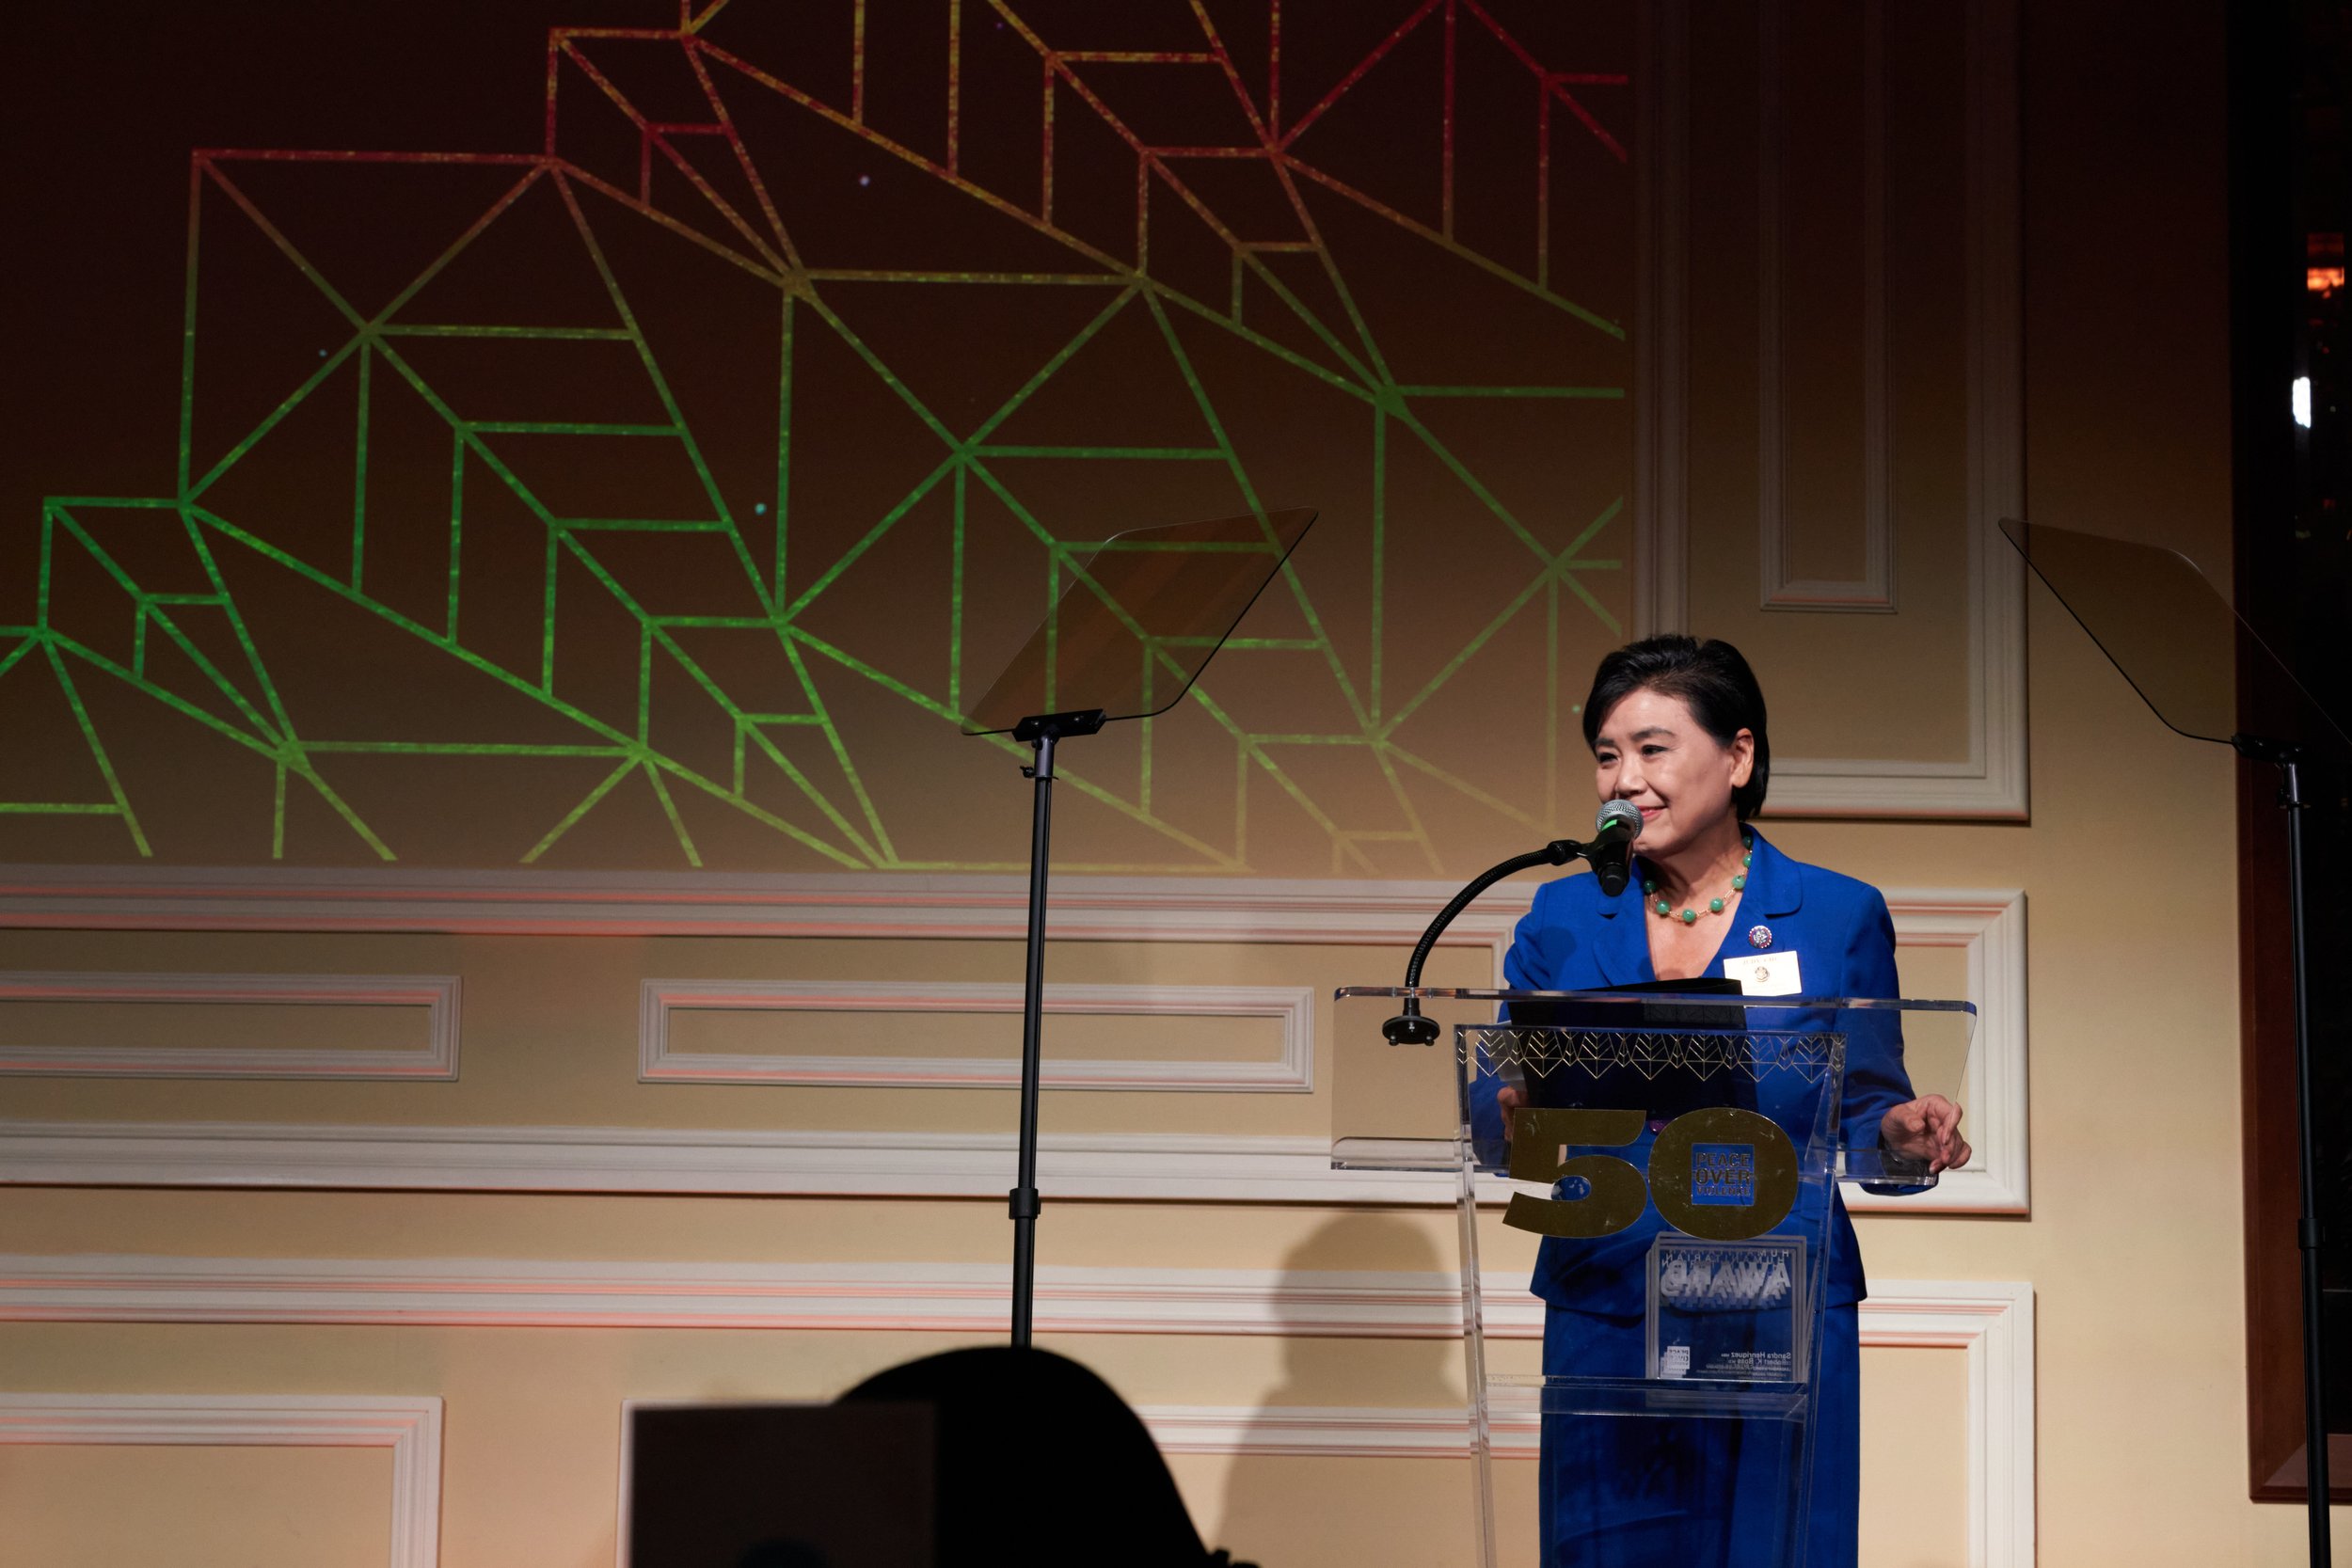  EOV Progam, Congresswoman Judy Chu remarks 